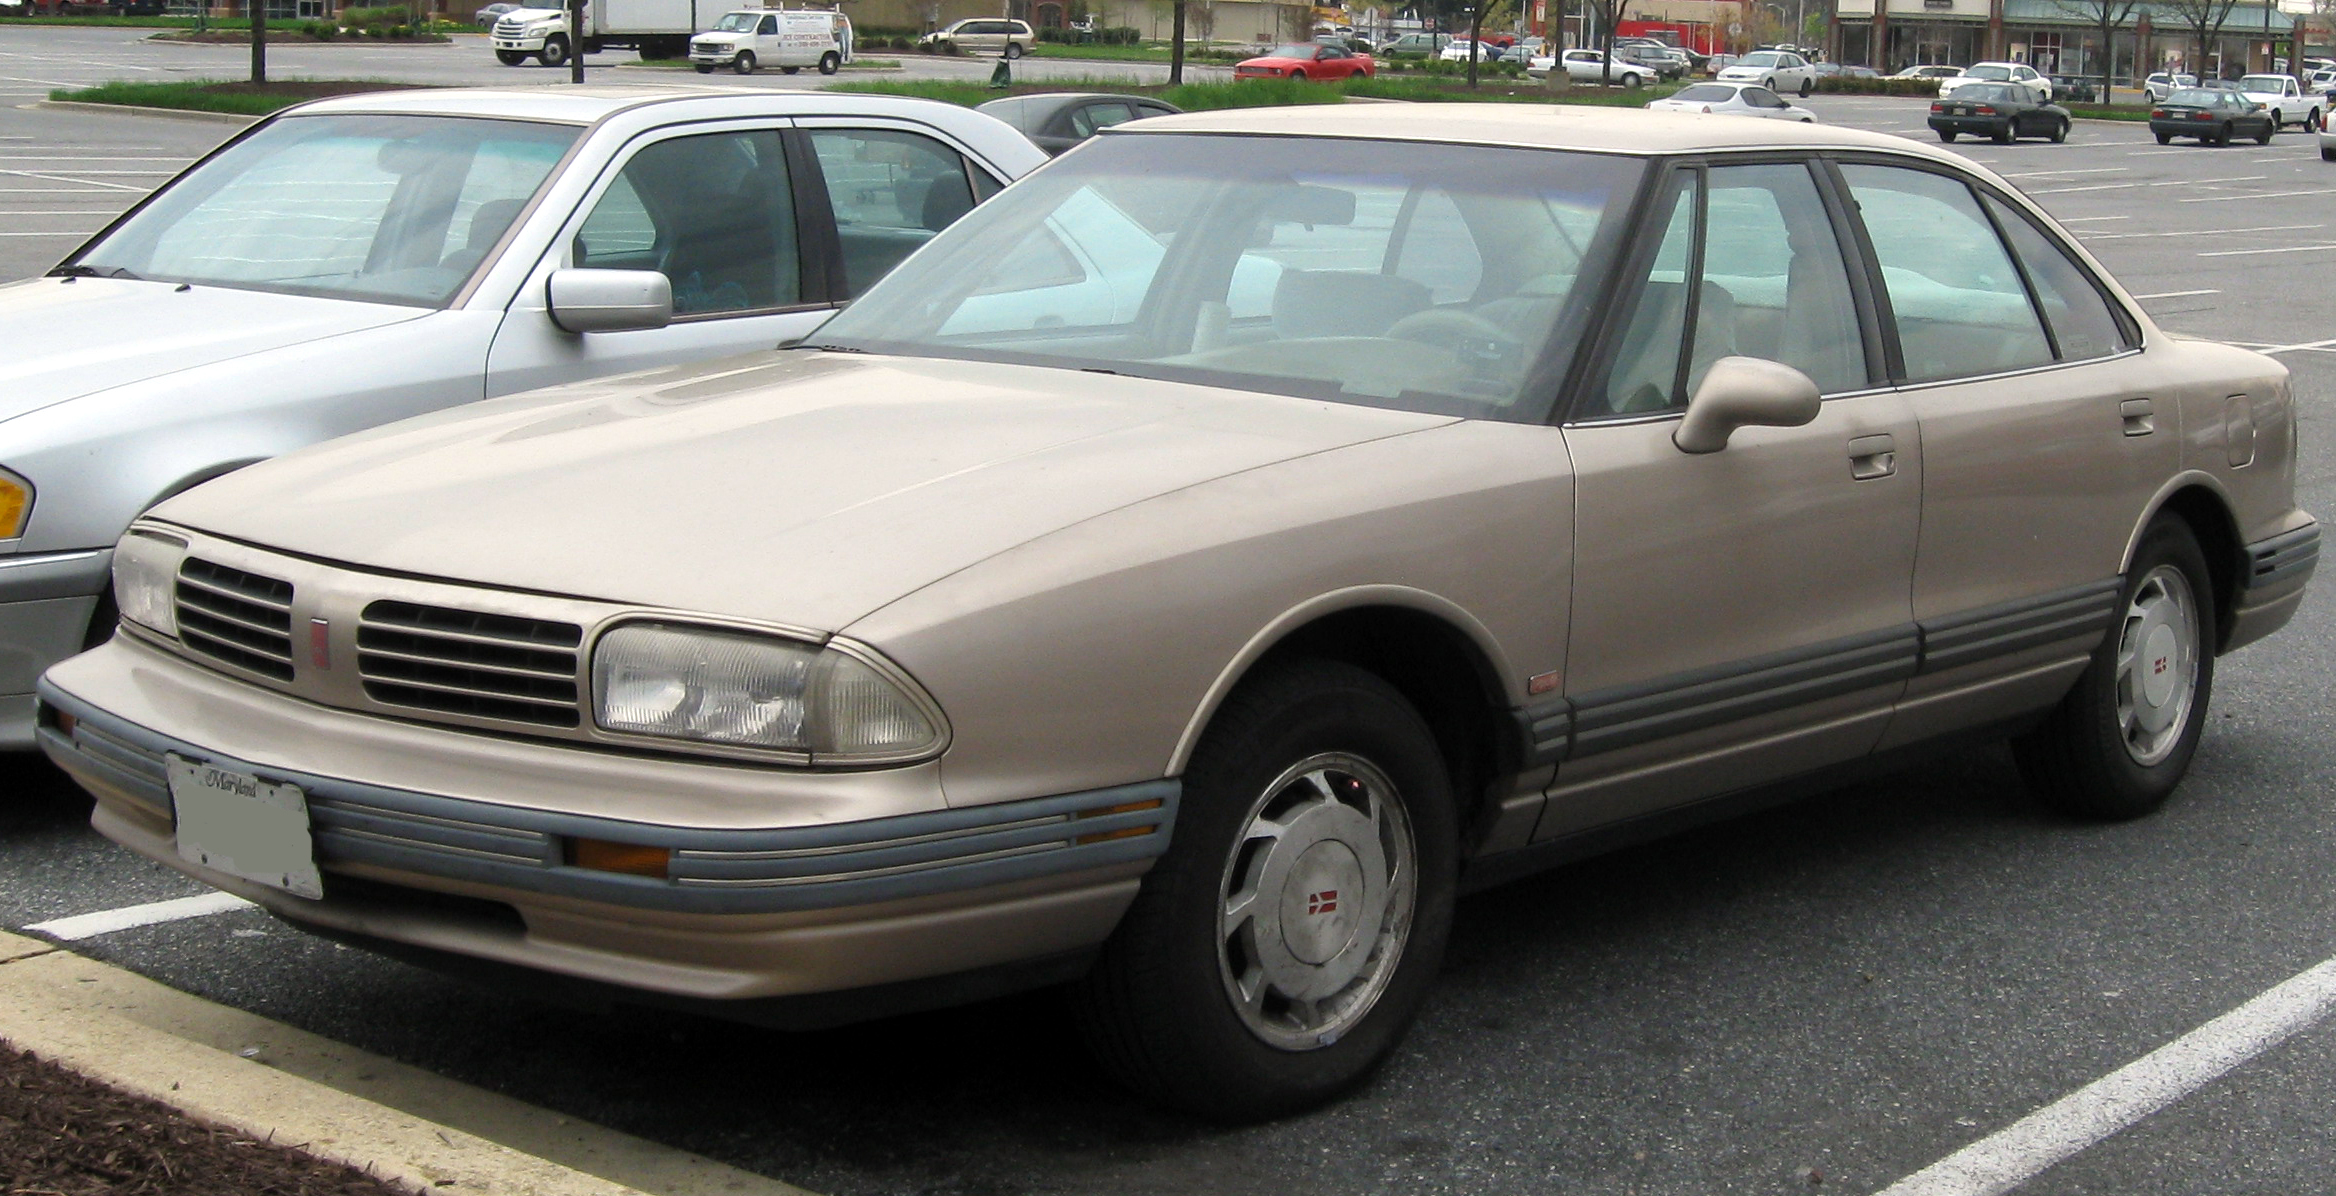 File:1994-1995 Oldsmobile Eighty-Eight -- 03-28-2012.JPG - Wikimedia Commons